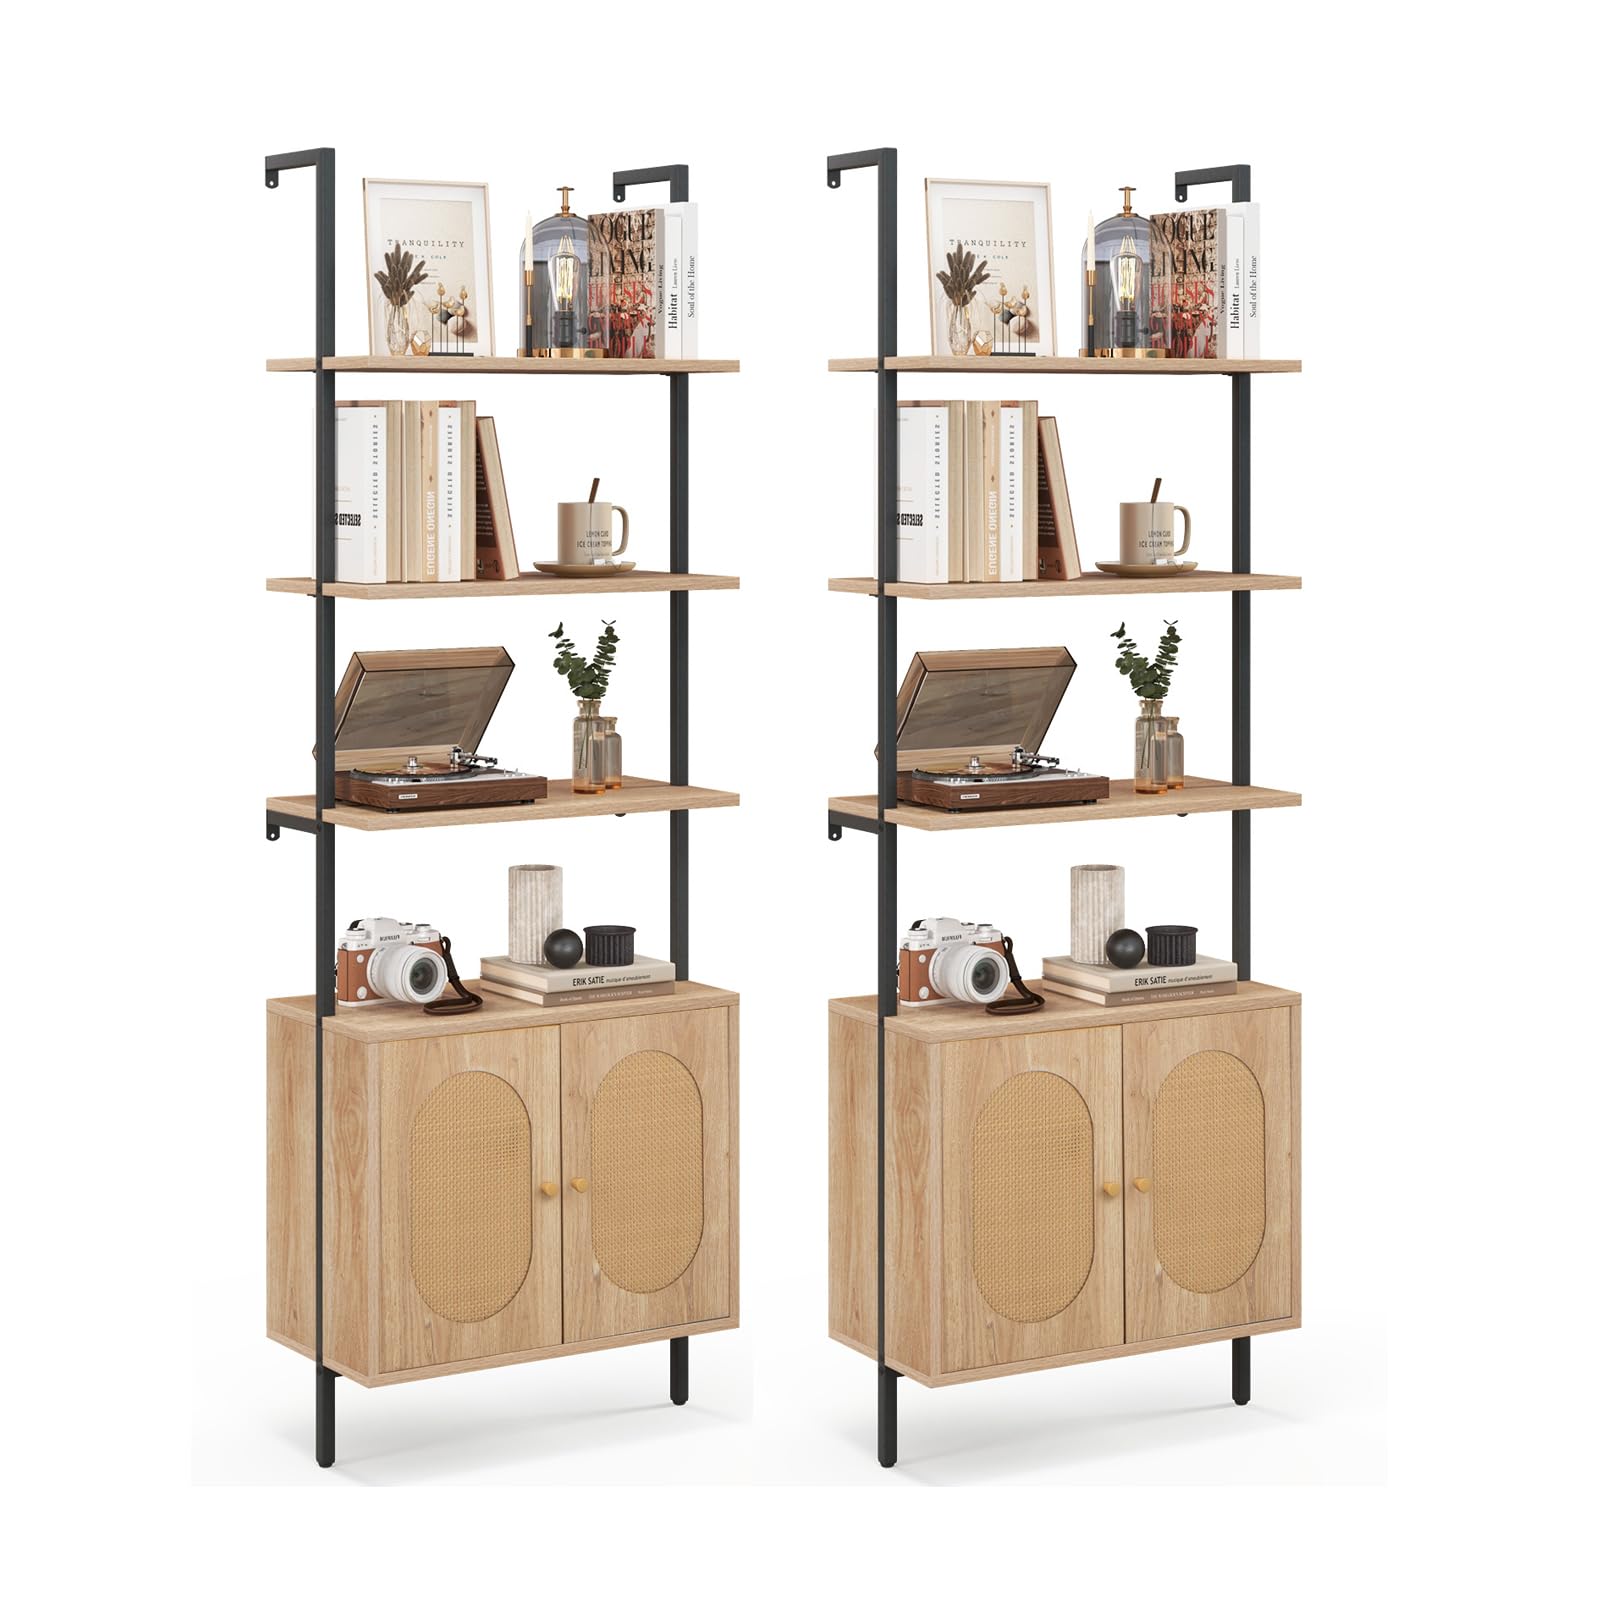 Giantex 71" Ladder Bookshelf with Cabinet